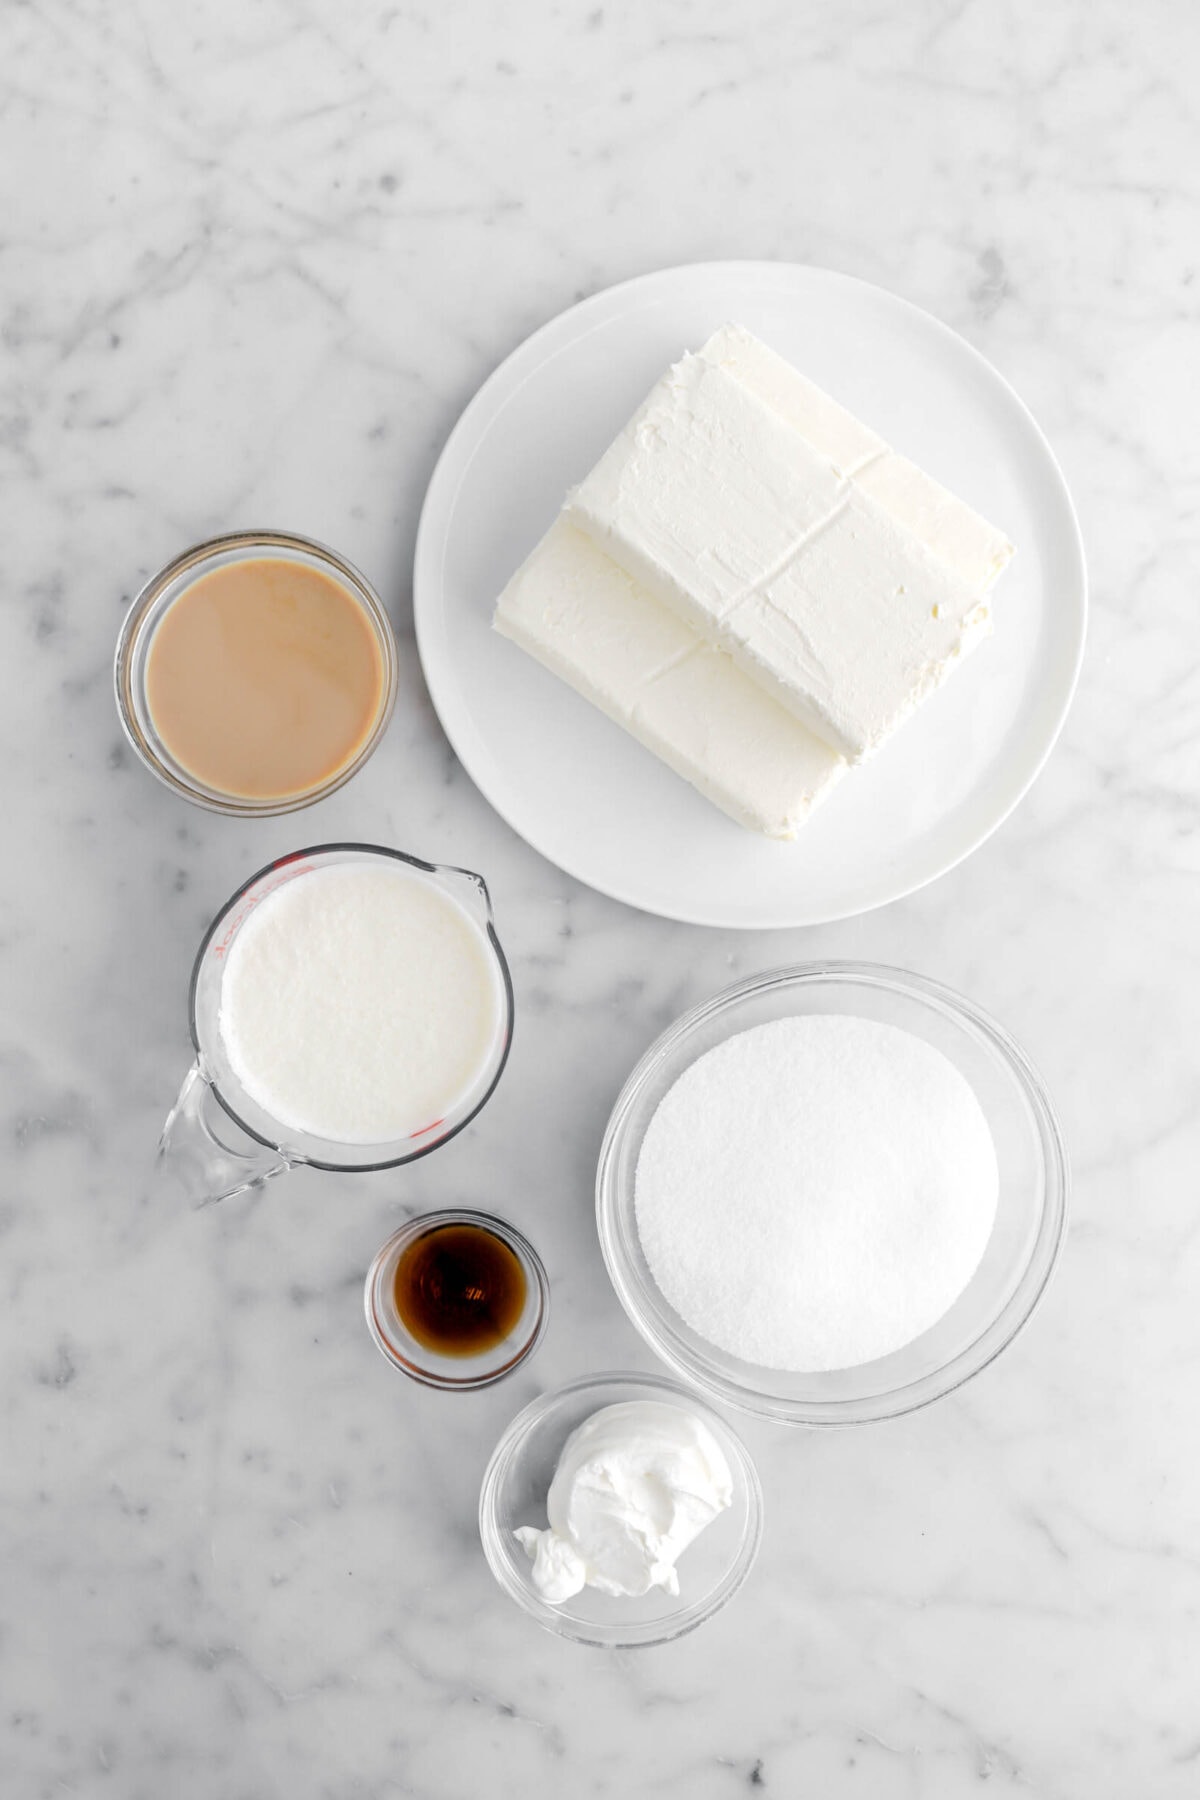 cream cheese, irish cream heavy cream, sugar, vanilla, and sour cream on marble surface.